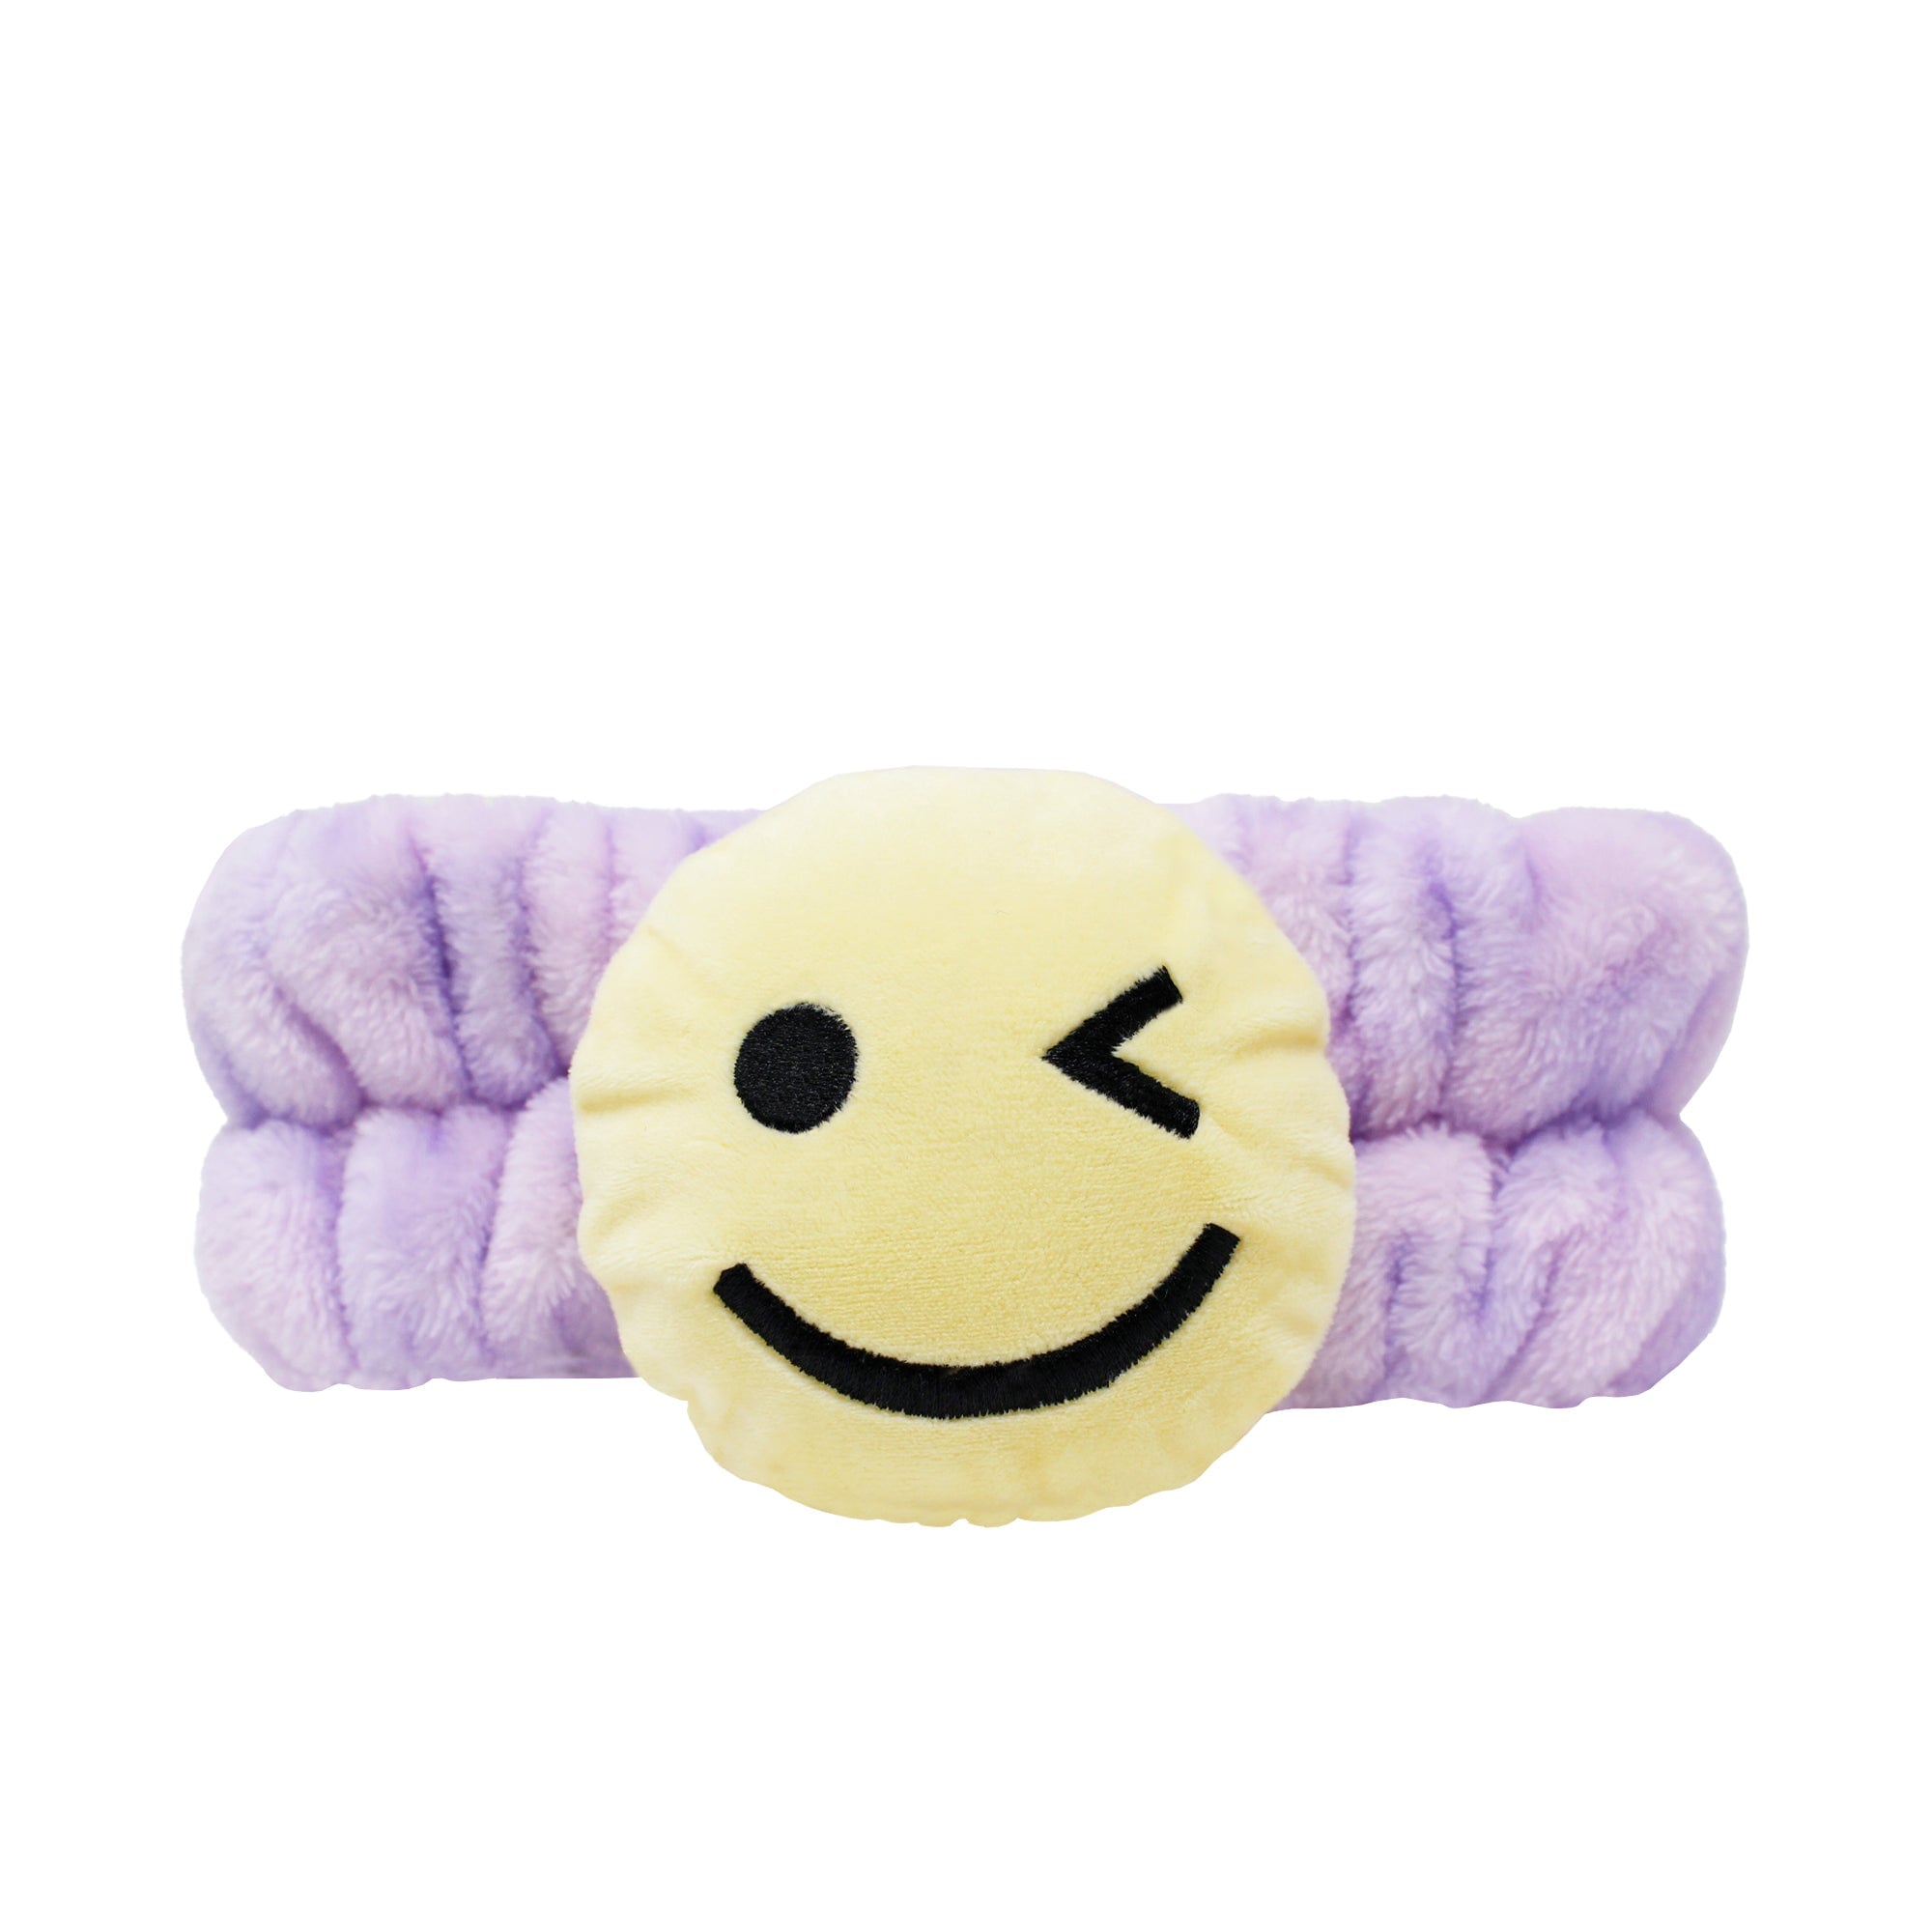 3D Teddy Headyband™ in “Winky Face” | Cruelty-Free & Vegan Headybands The Crème Shop 